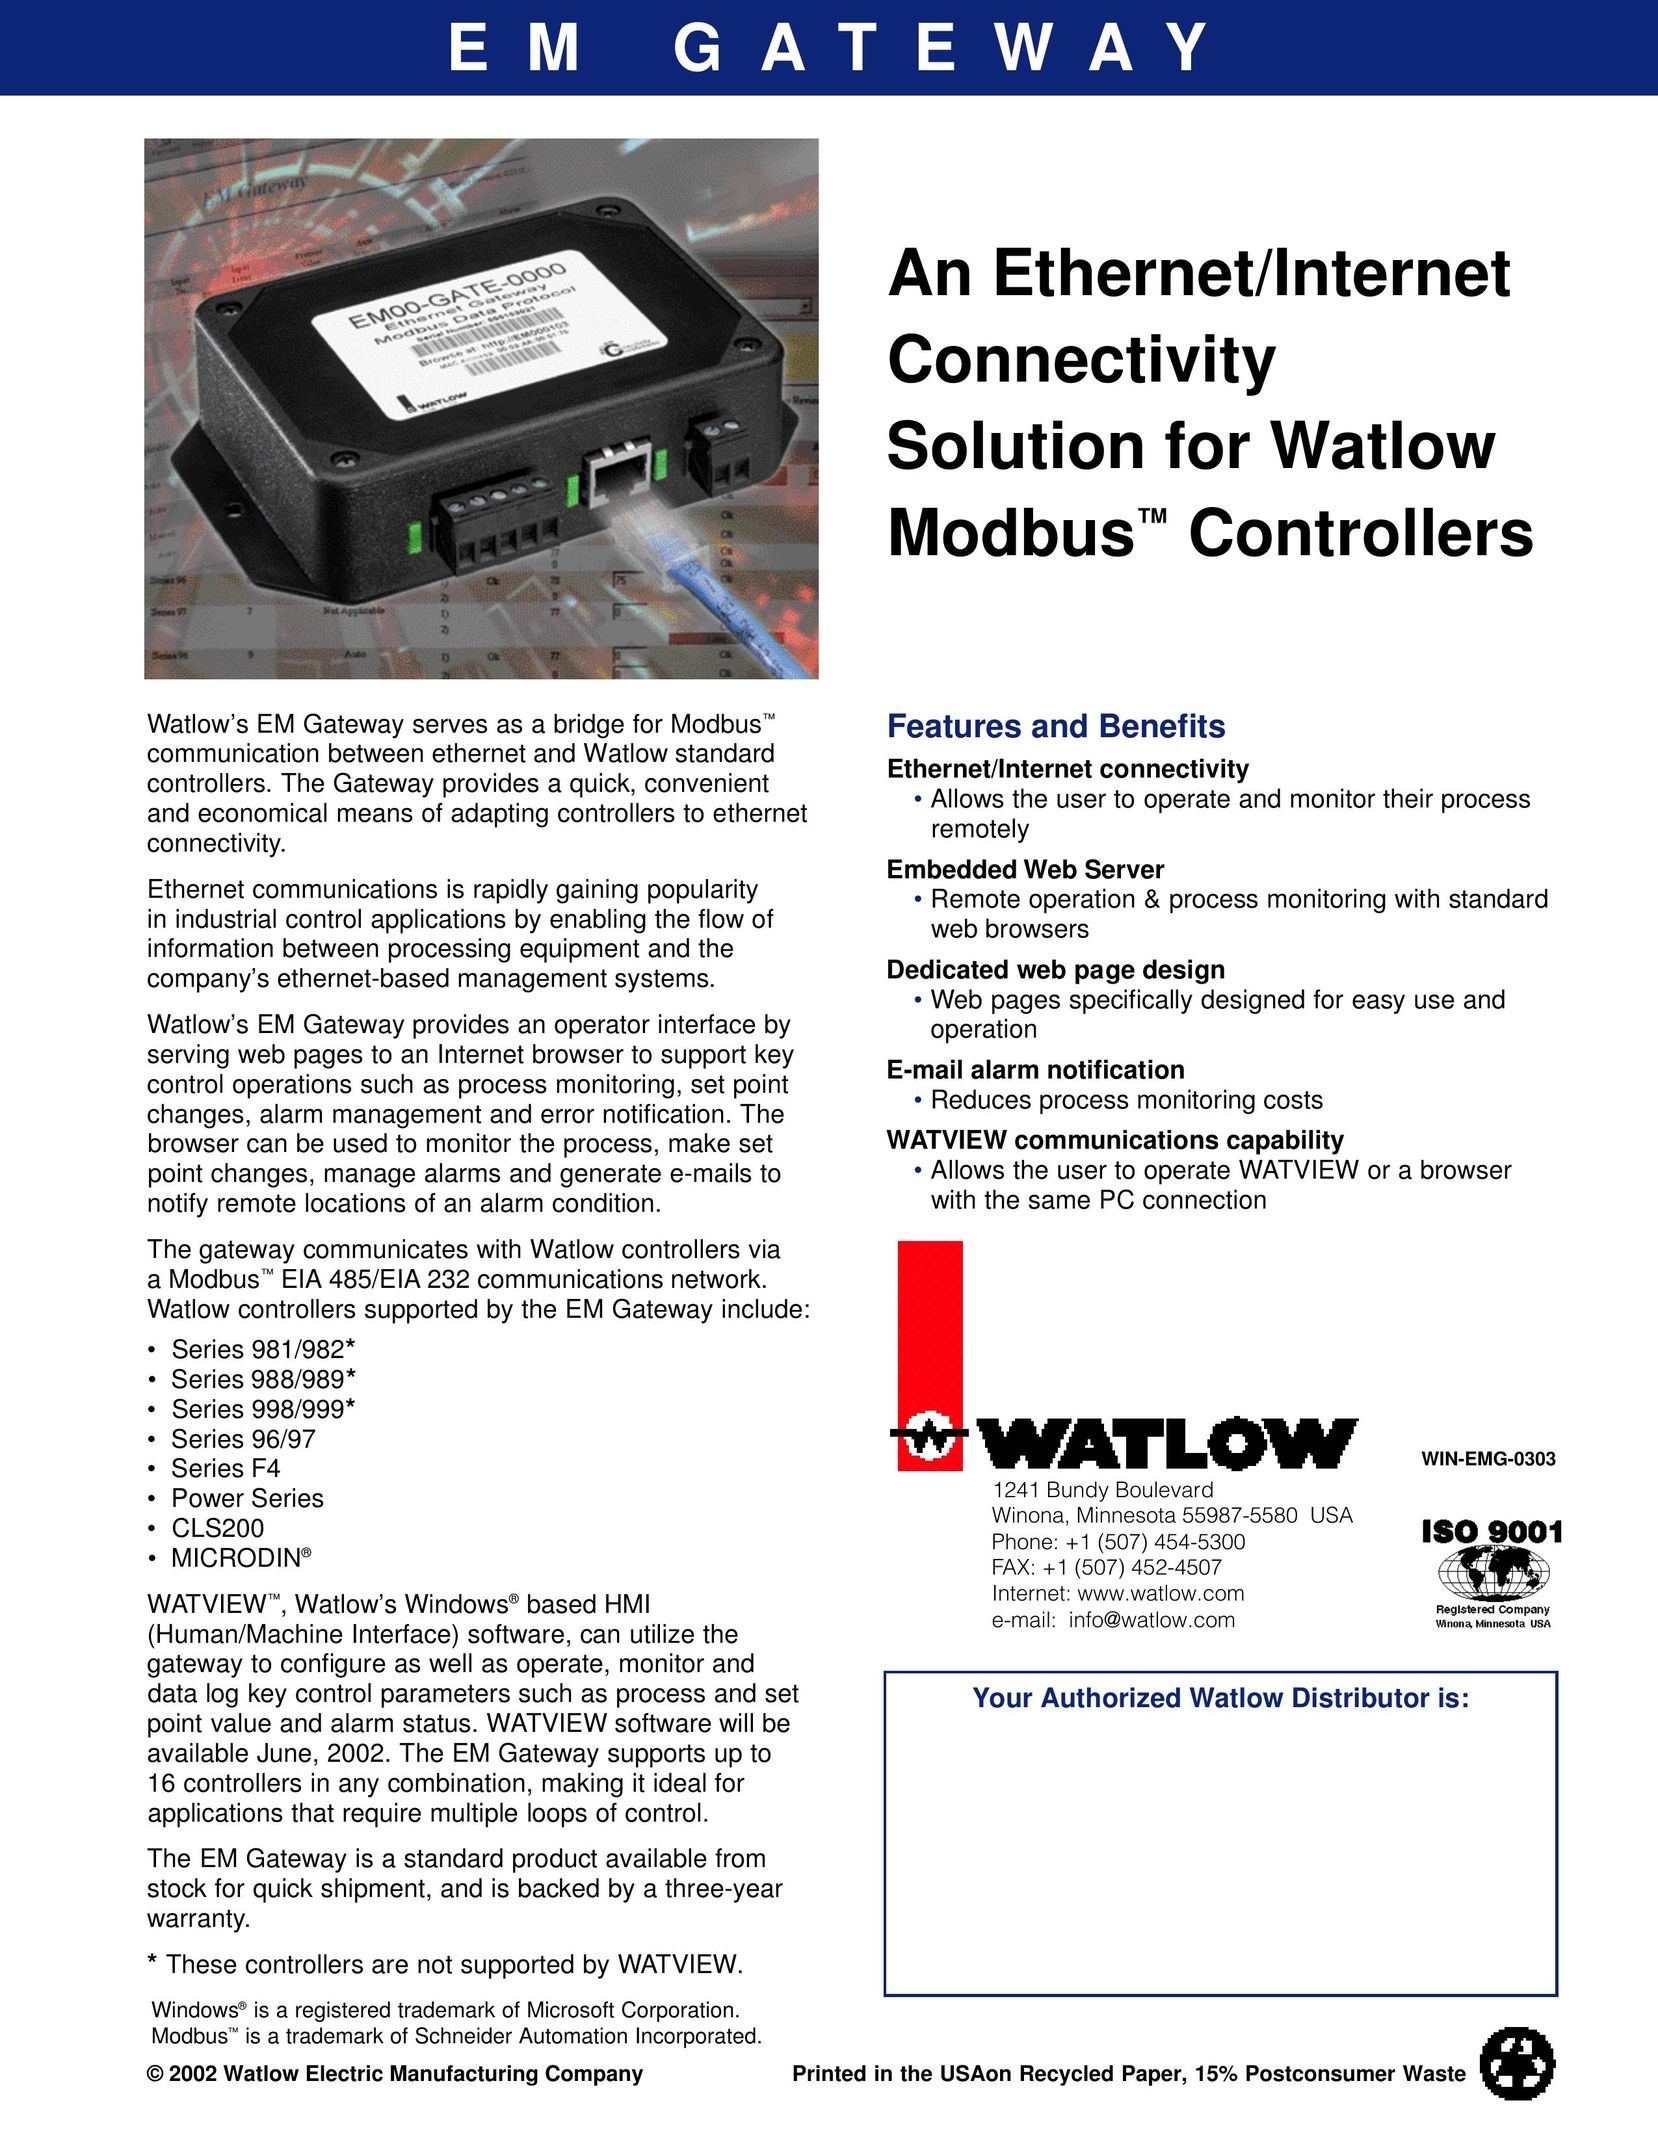 Watlow Electric WIN-EMG-0303 Network Card User Manual